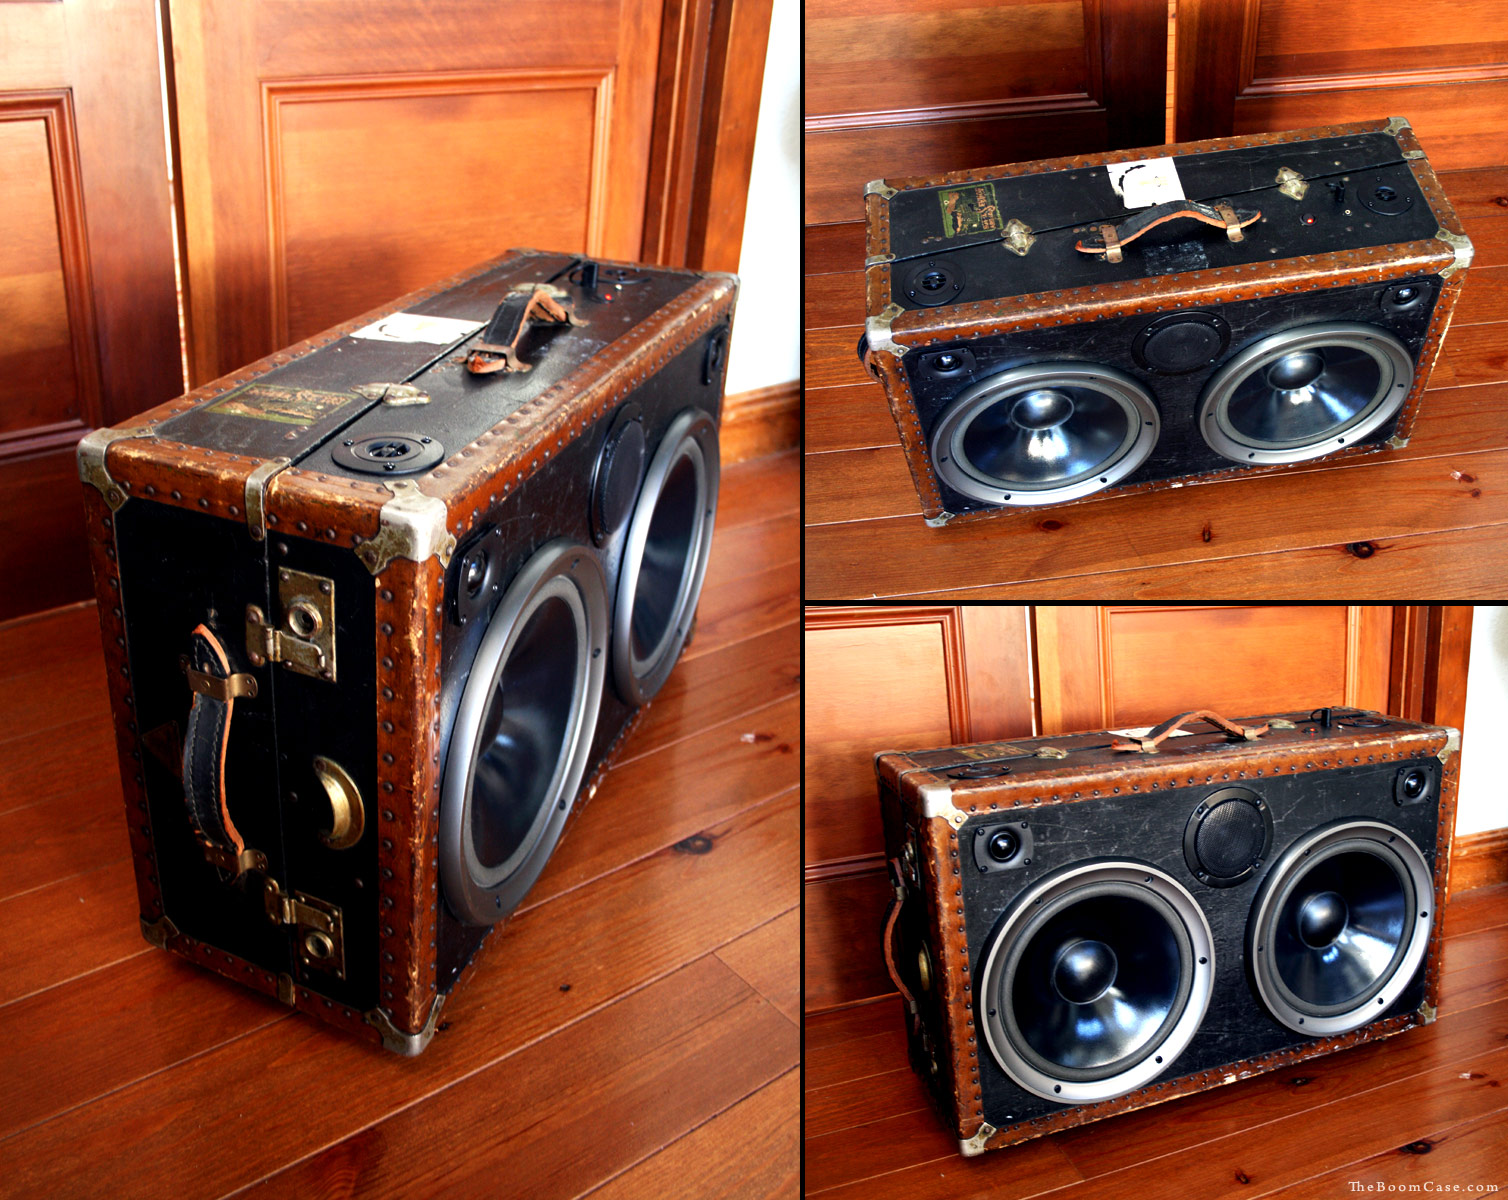 bluetooth speaker trunk